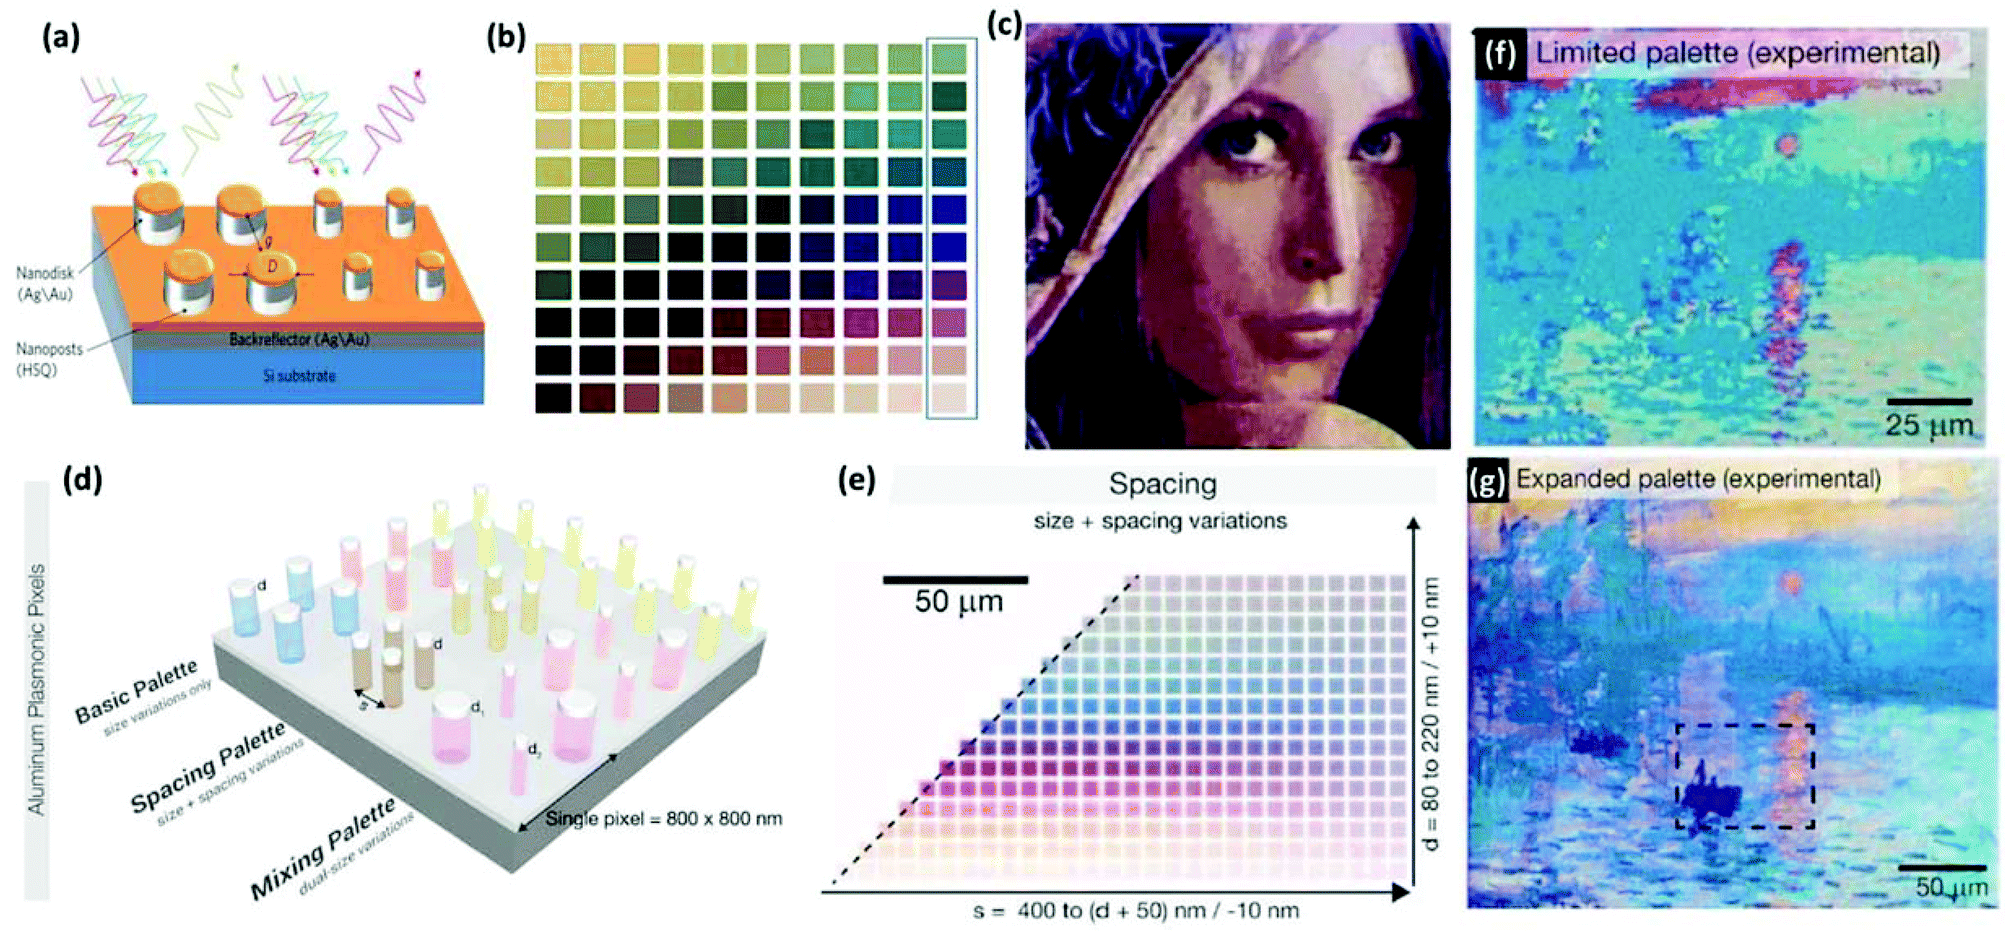 Color generation via subwavelength plasmonic nanostructures - Nanoscale  (RSC Publishing) DOI:10.1039/C5NR00578G